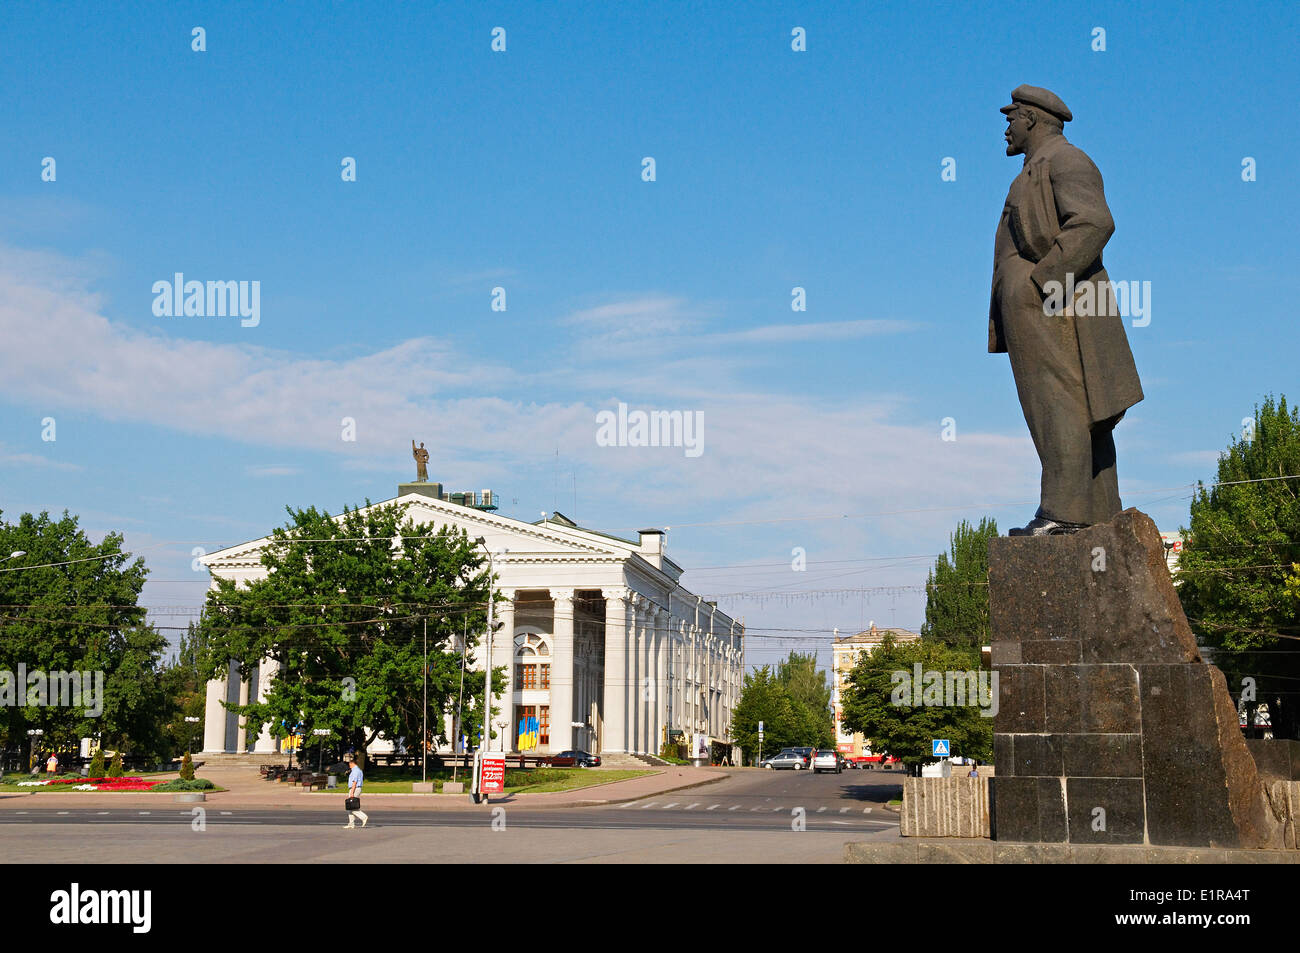 Ukraine, Donetsk, Lenine statue on the main square Stock Photo